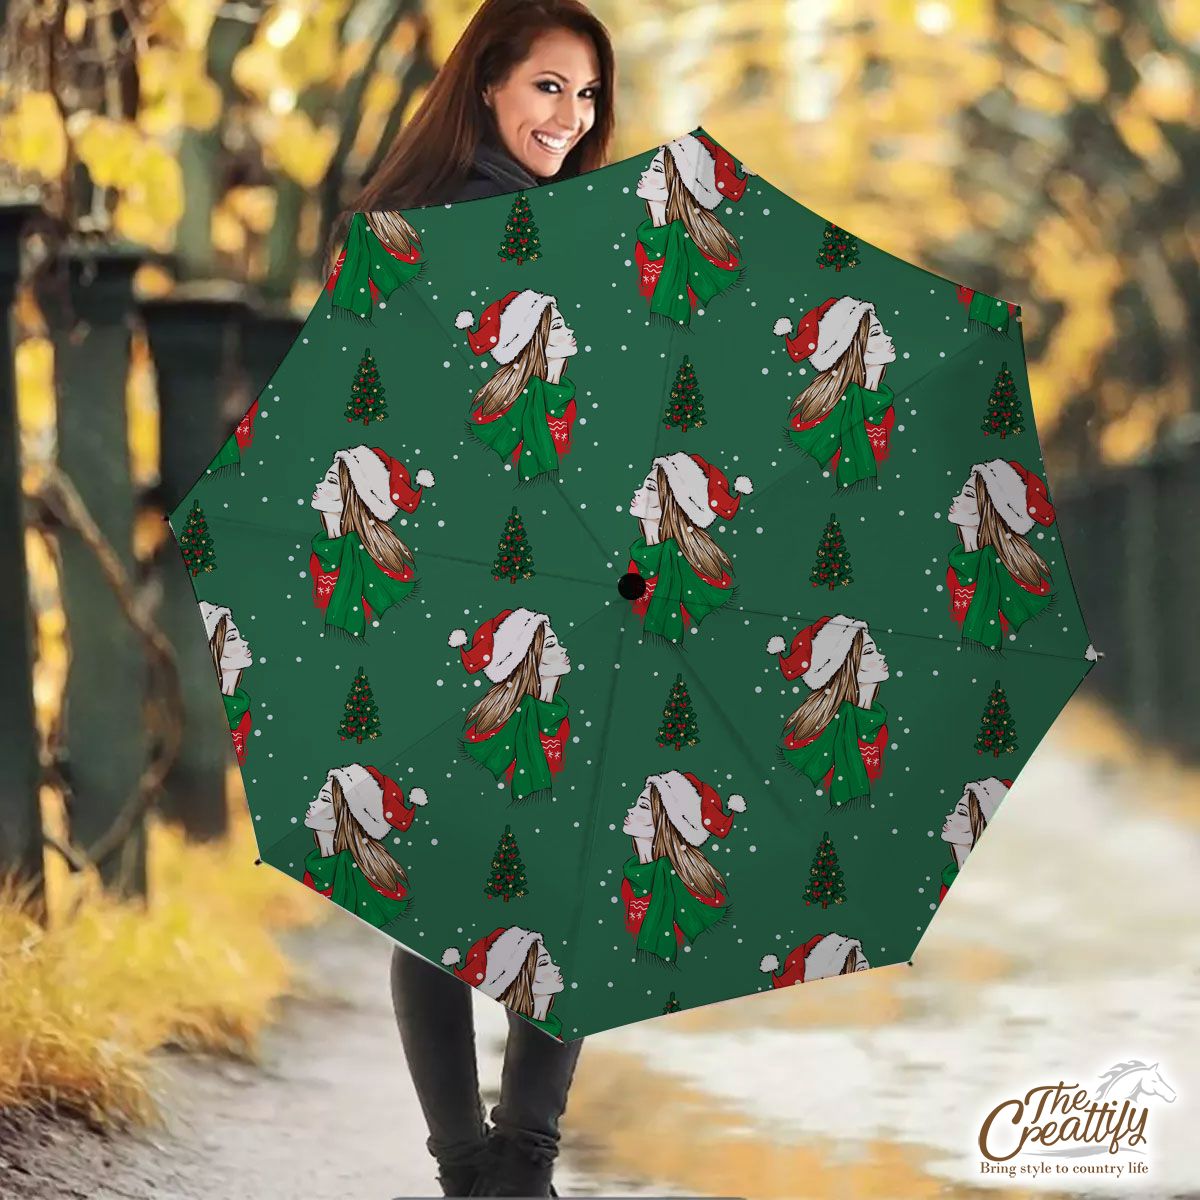 Christmas Girls With Christmas Tree On Green Background Umbrella